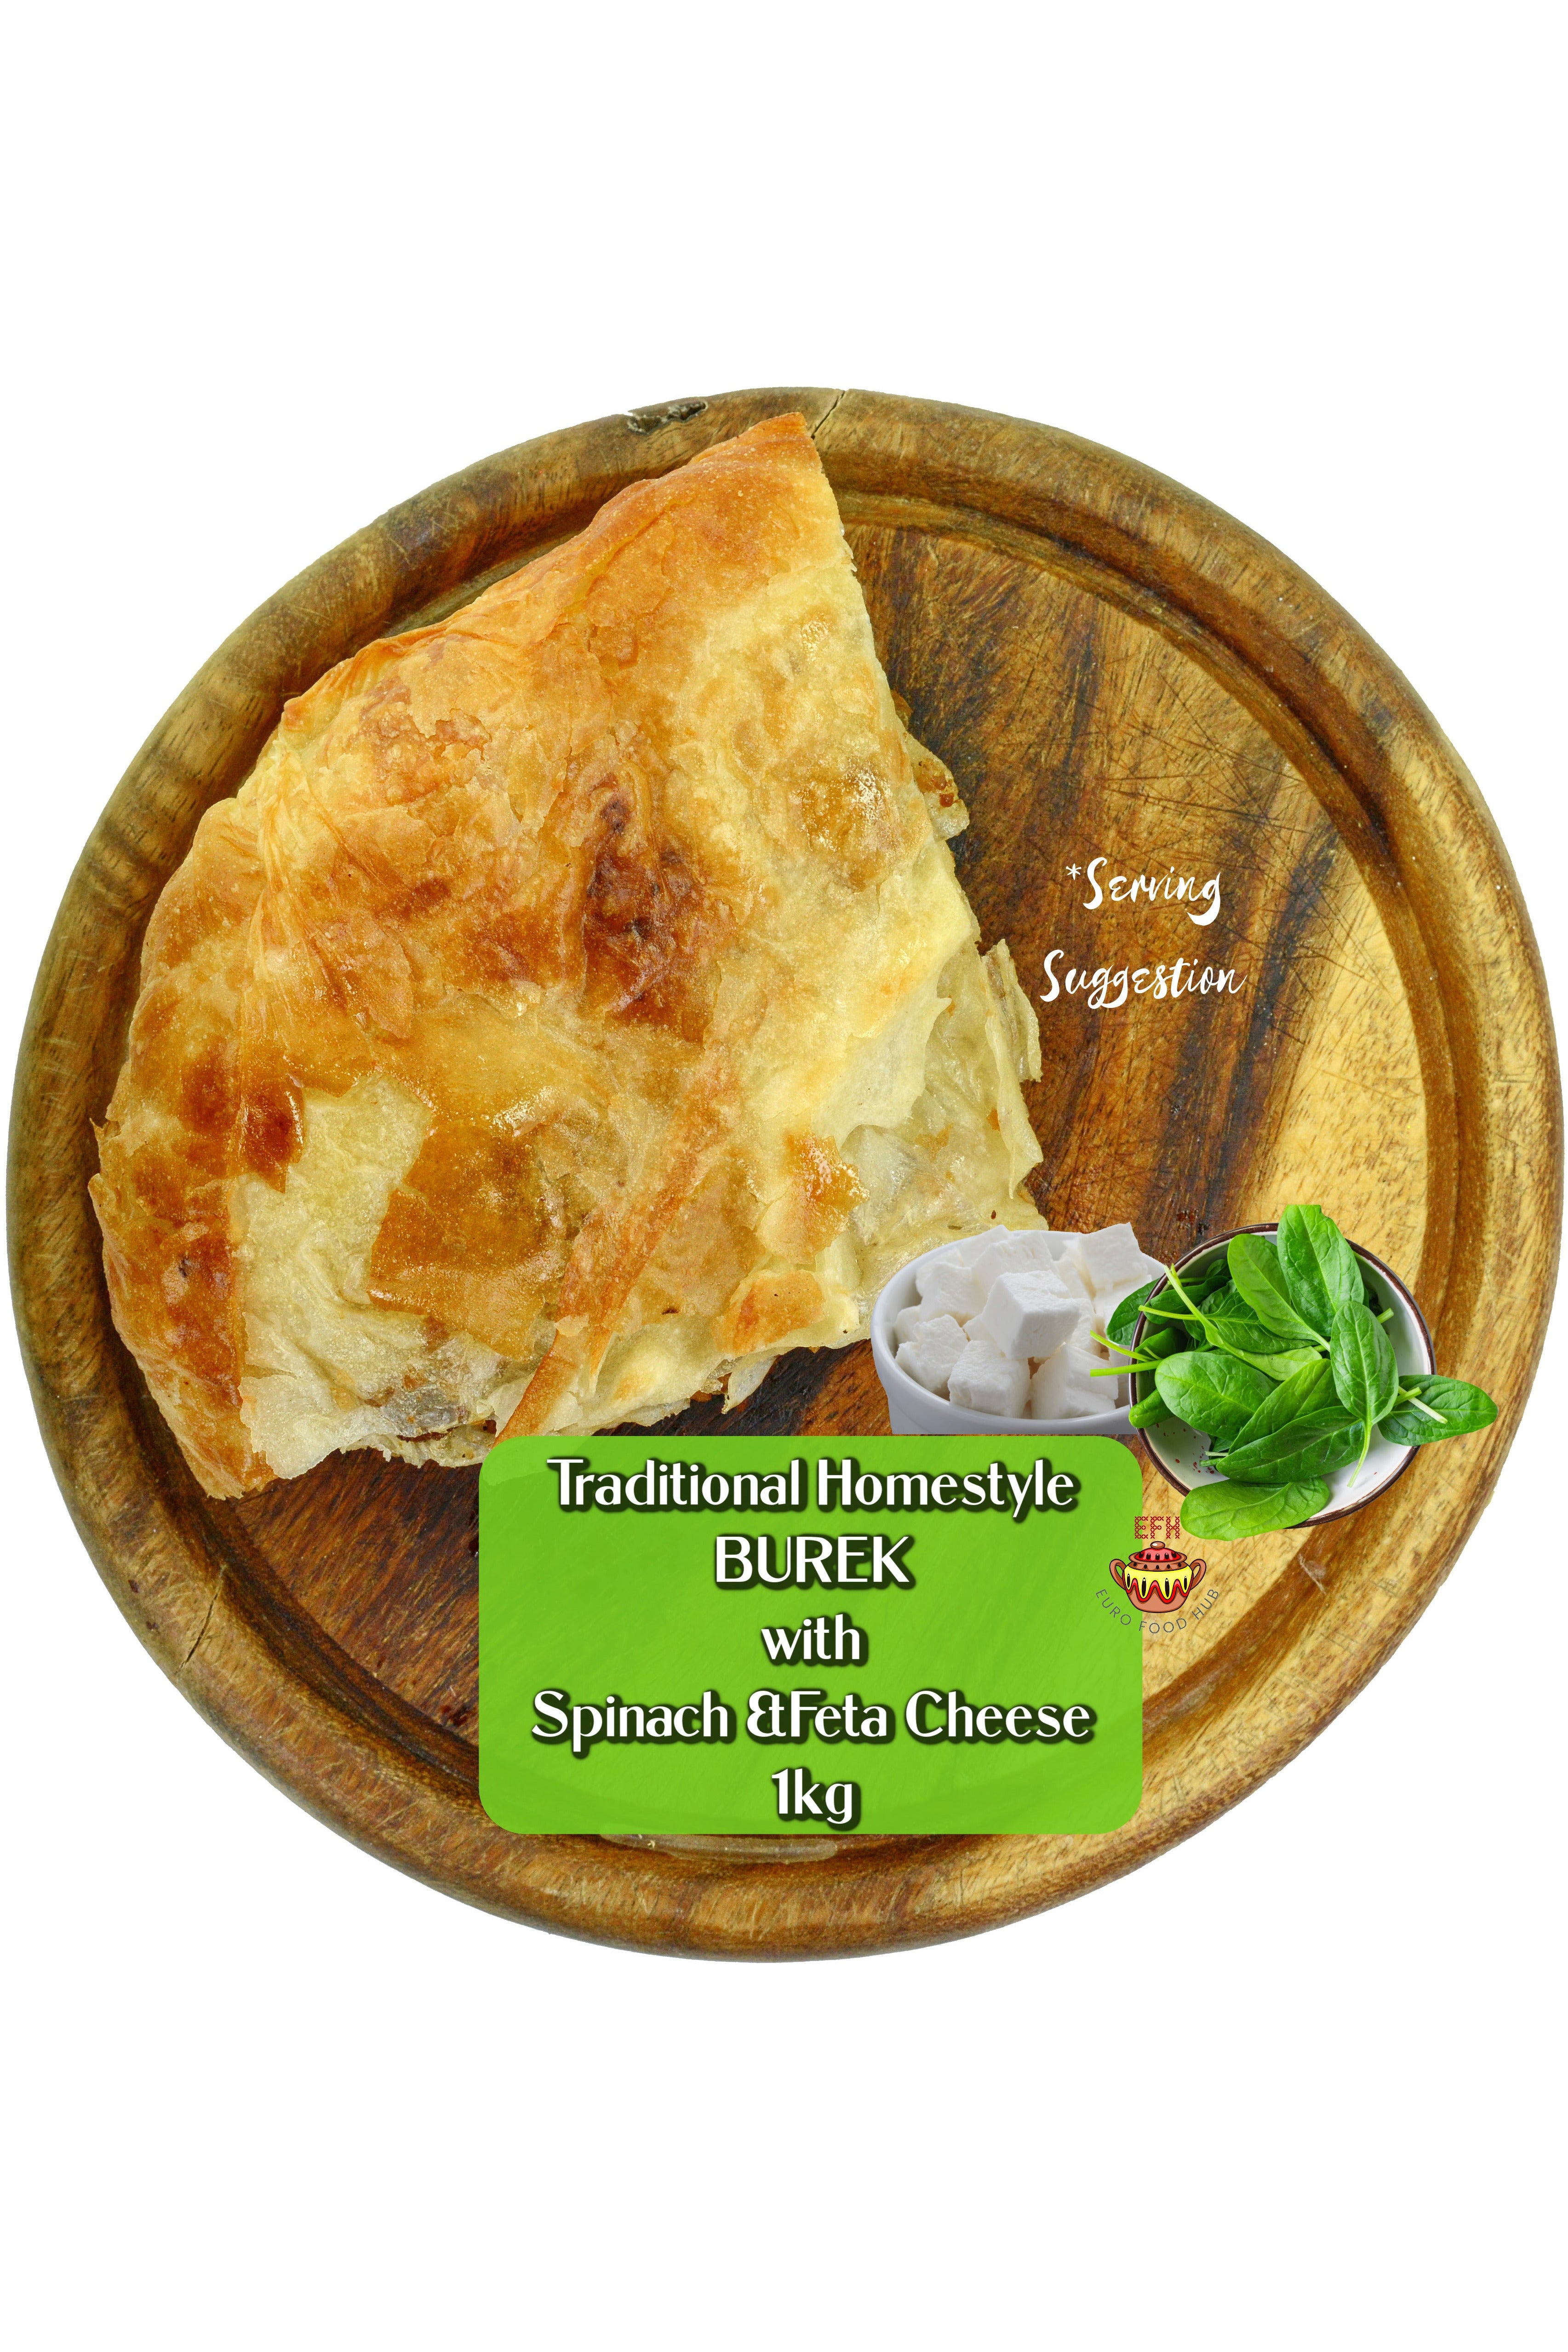 Homestyle BUREK with Spinach & Cheese - 1kg /FROZEN/